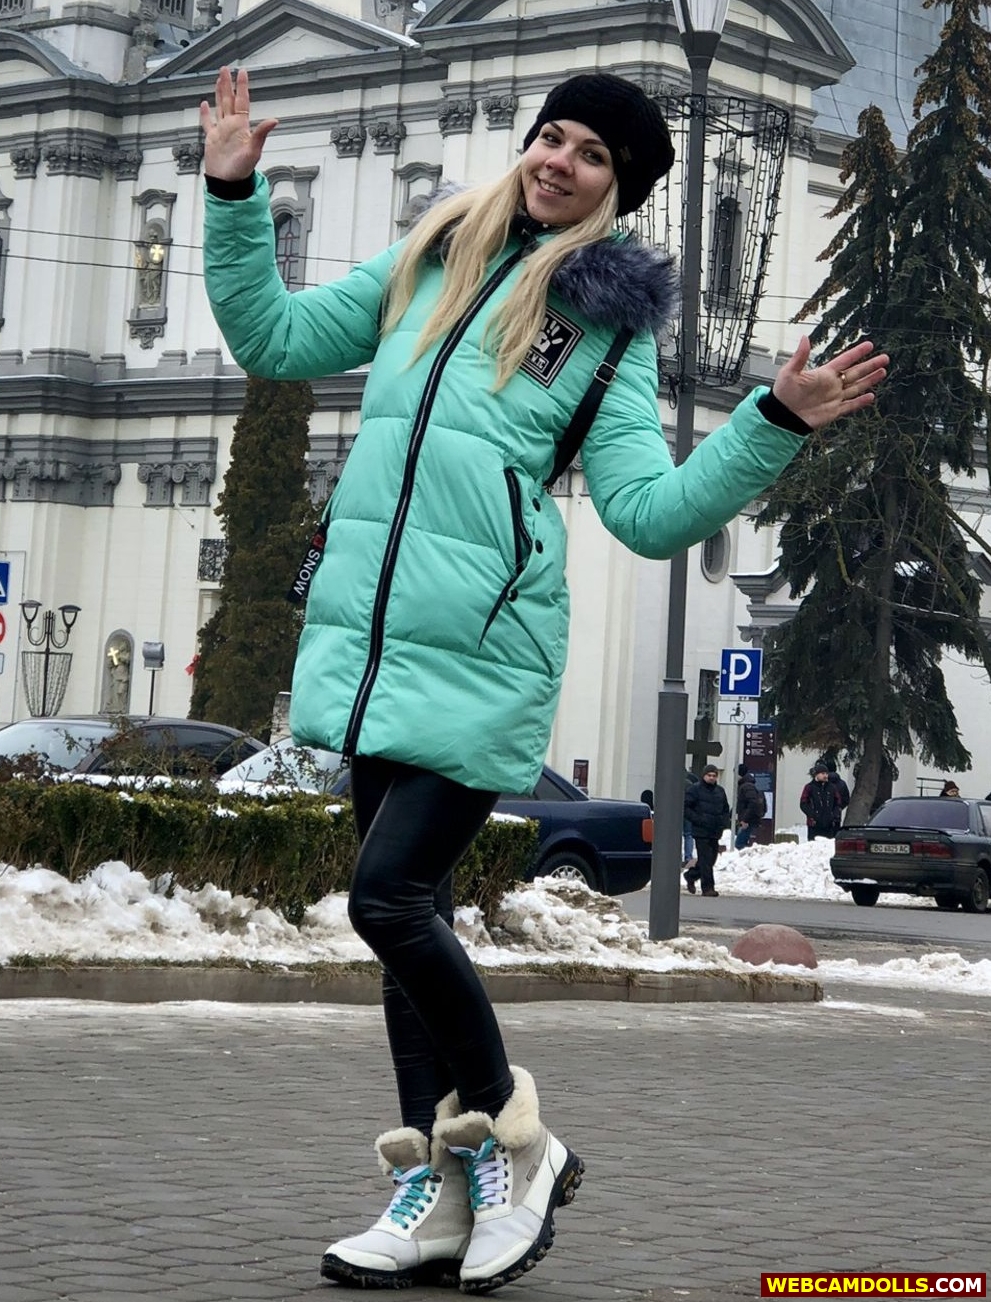 Blonde Girl wearing Black Ski Suit and Green Anorak on Webcamdolls